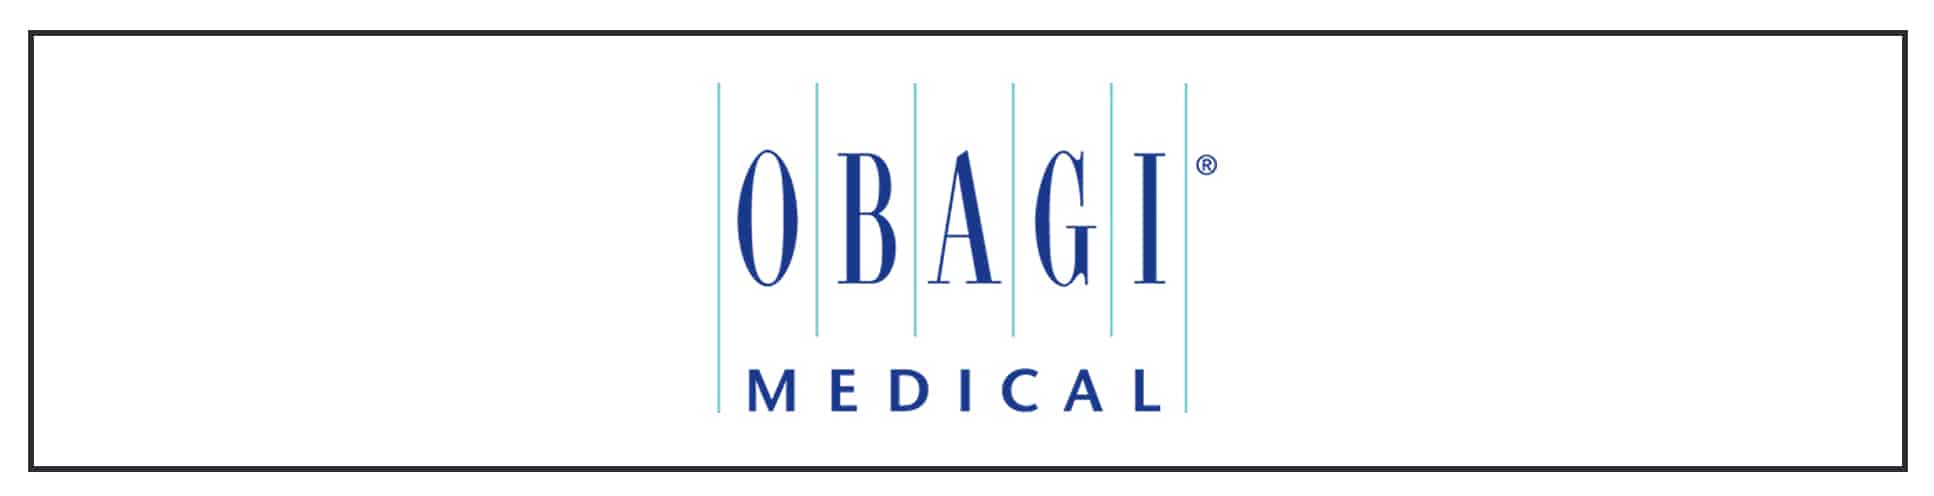 Obagi medical logo on a white background.